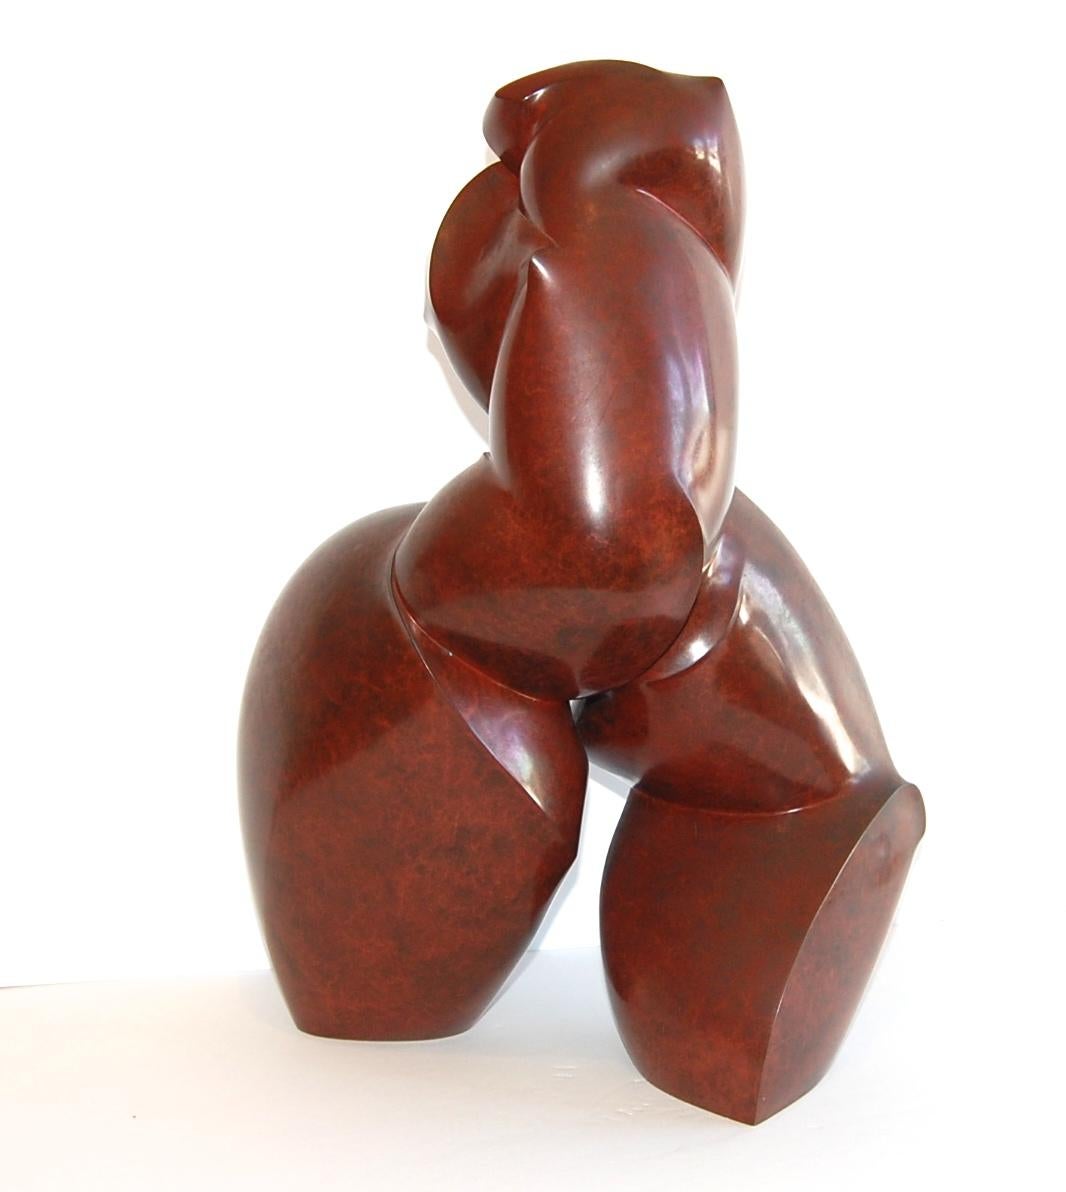 Dominique Polies Nude Bronze Sculpture